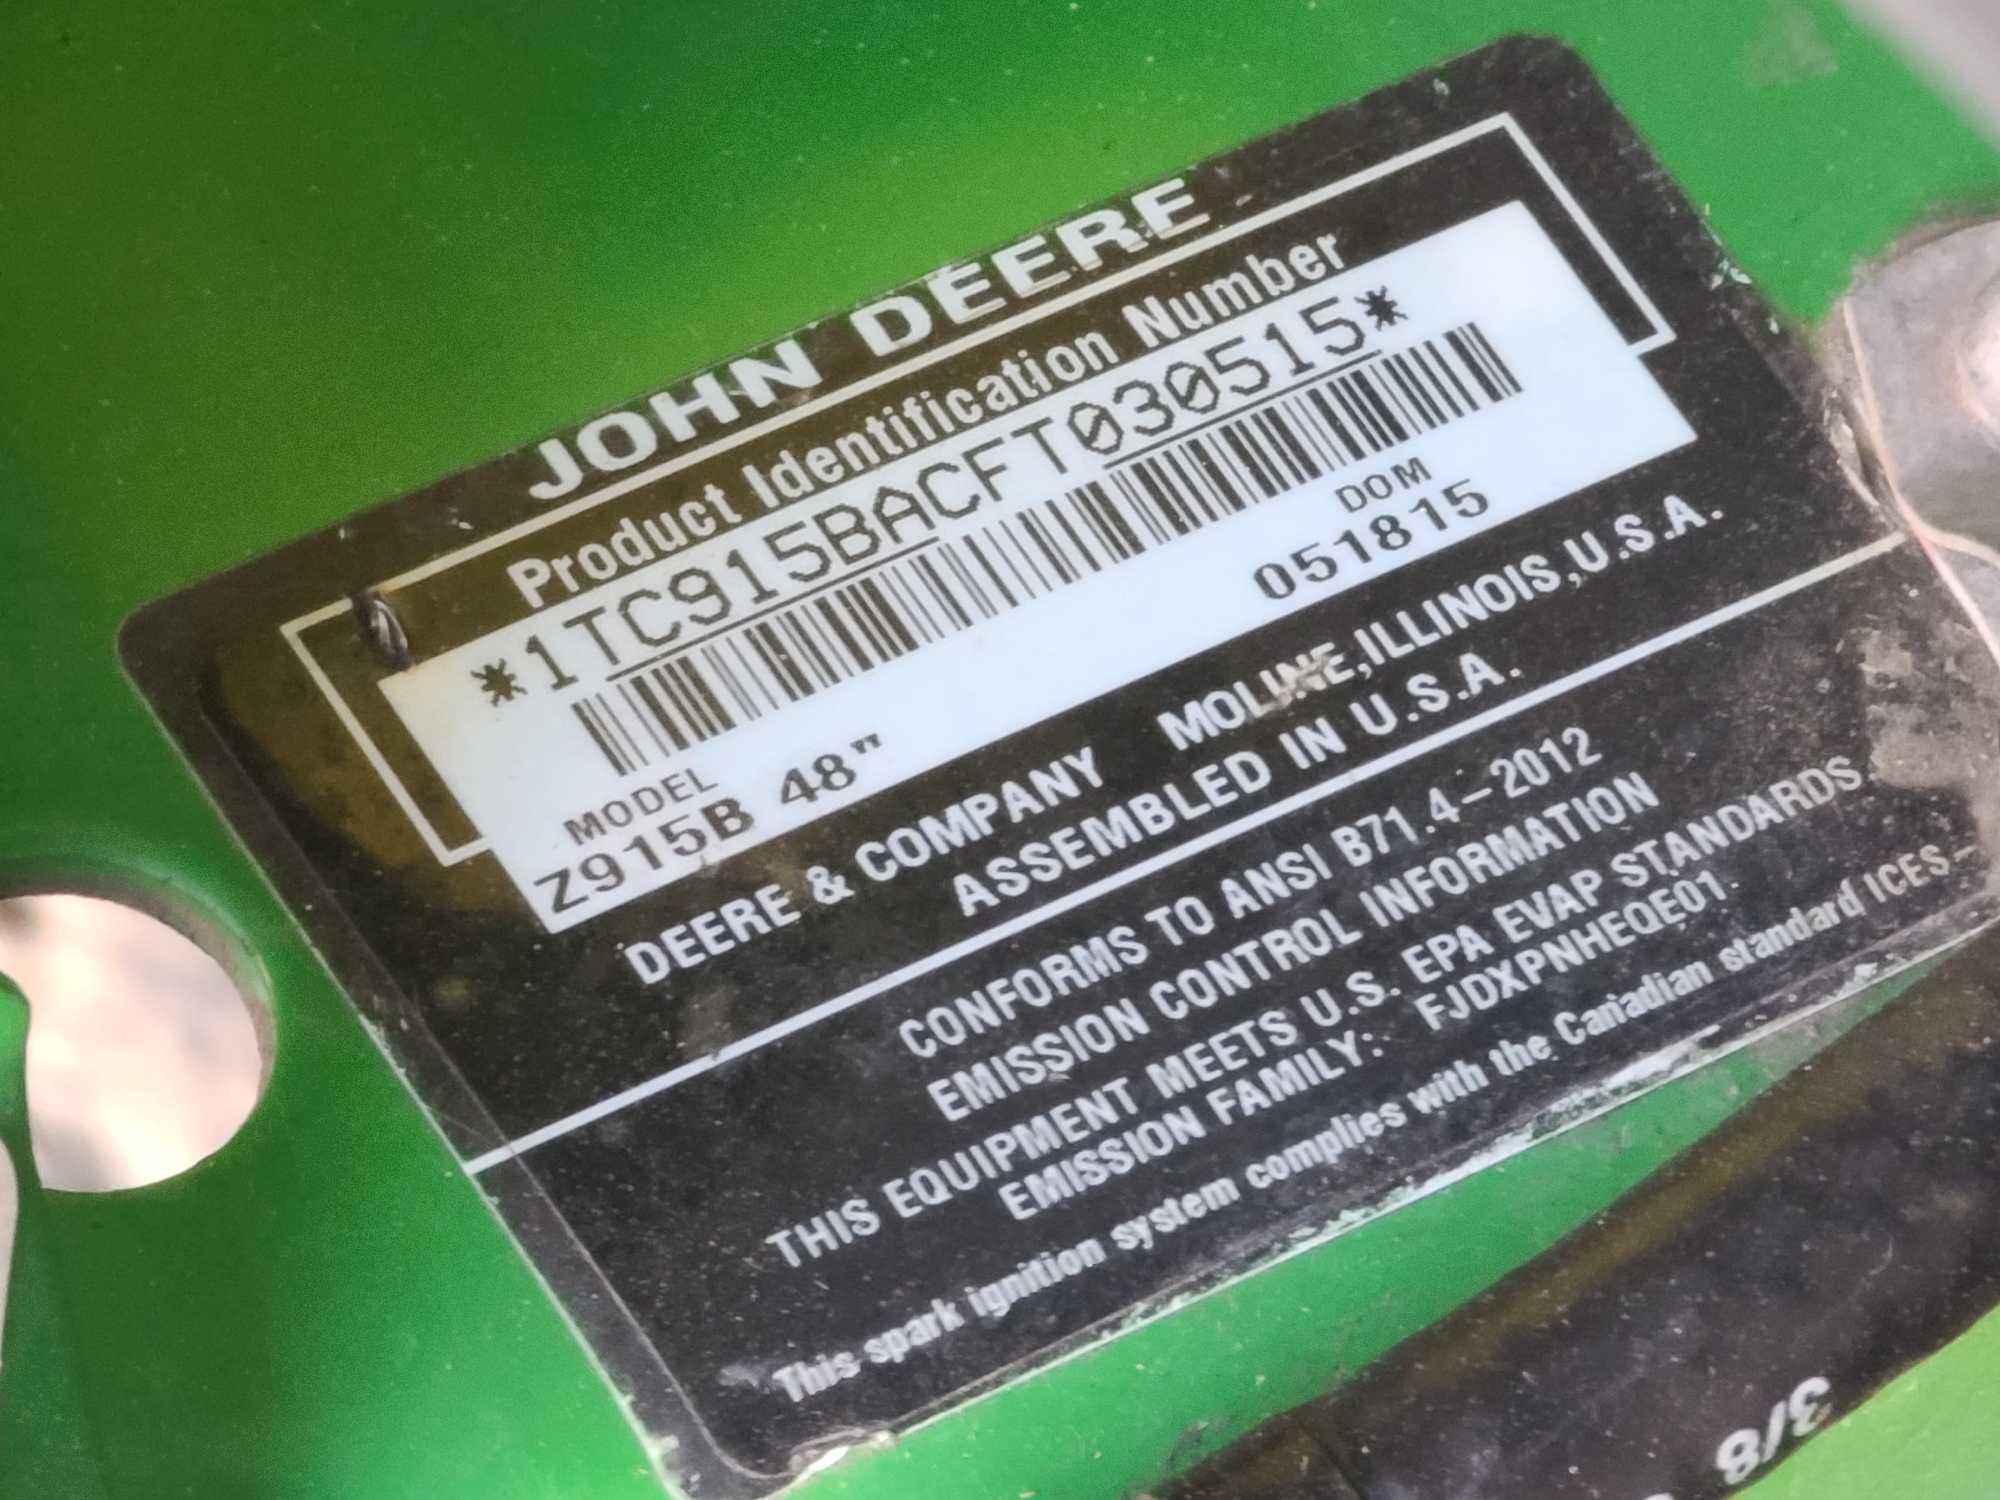 John Deere Z915B 48in. Commercial Mower